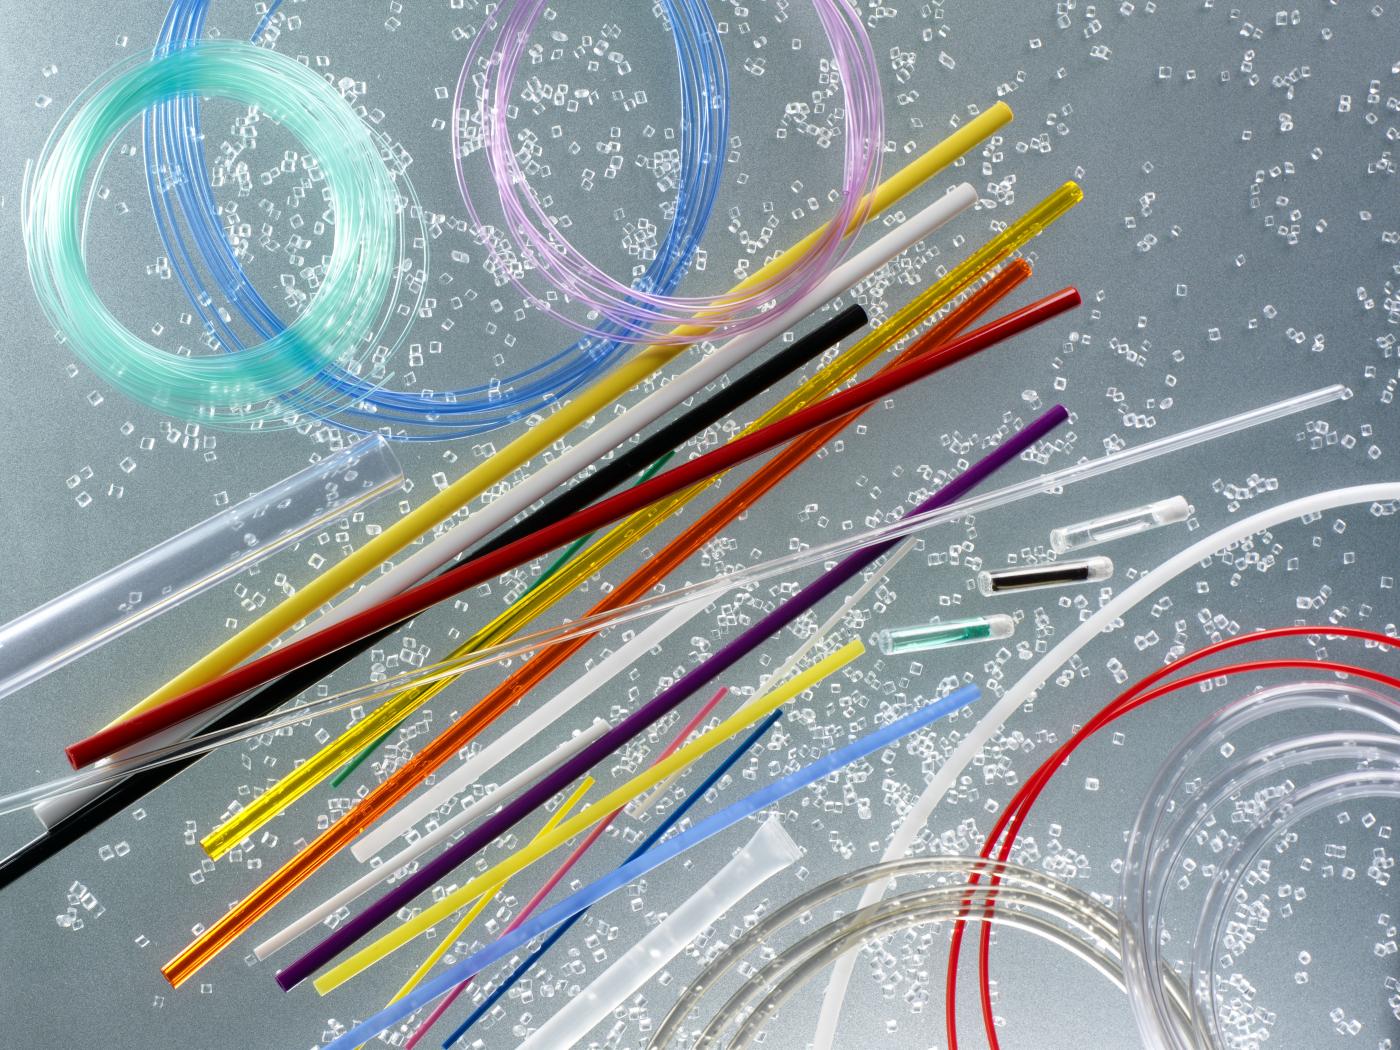 teel medical tubing and plastic resin beads